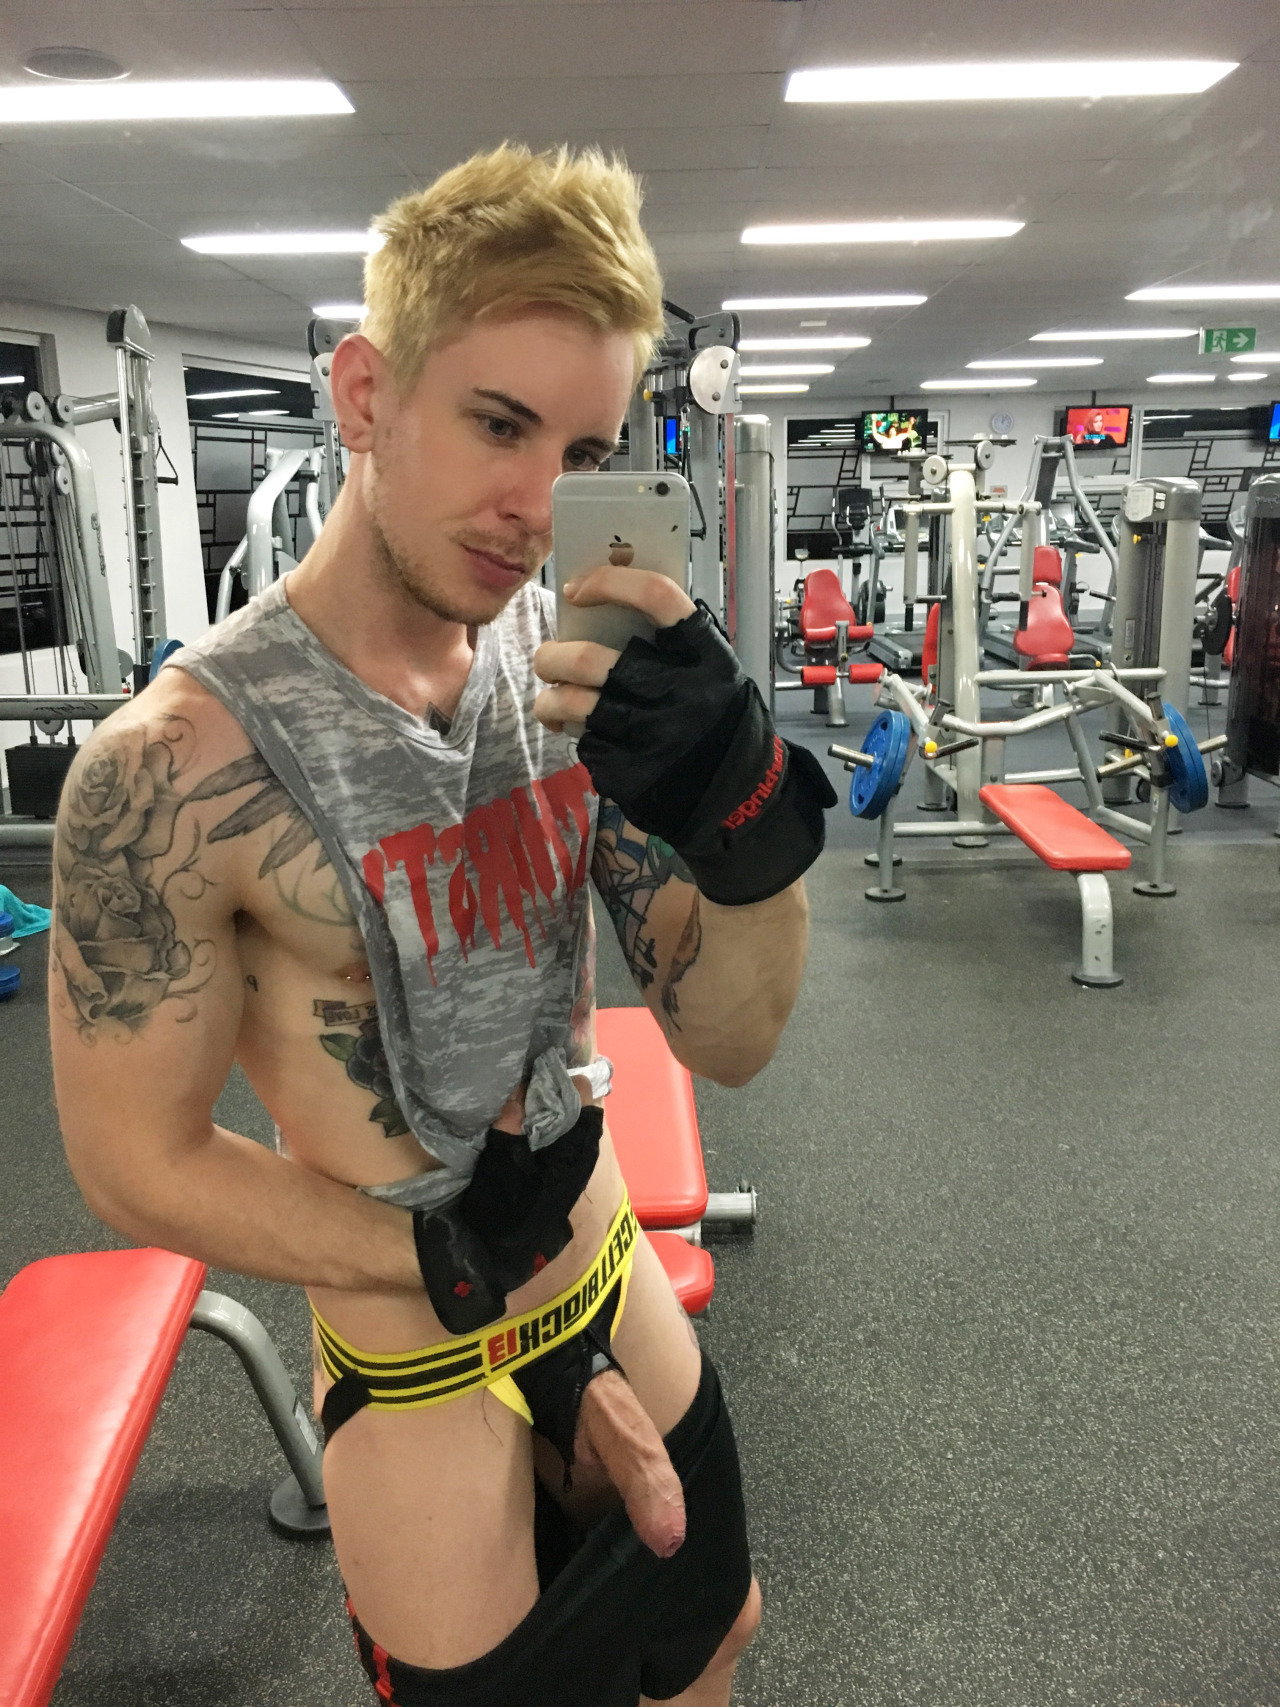 nude gym selfie guy hd sex photo